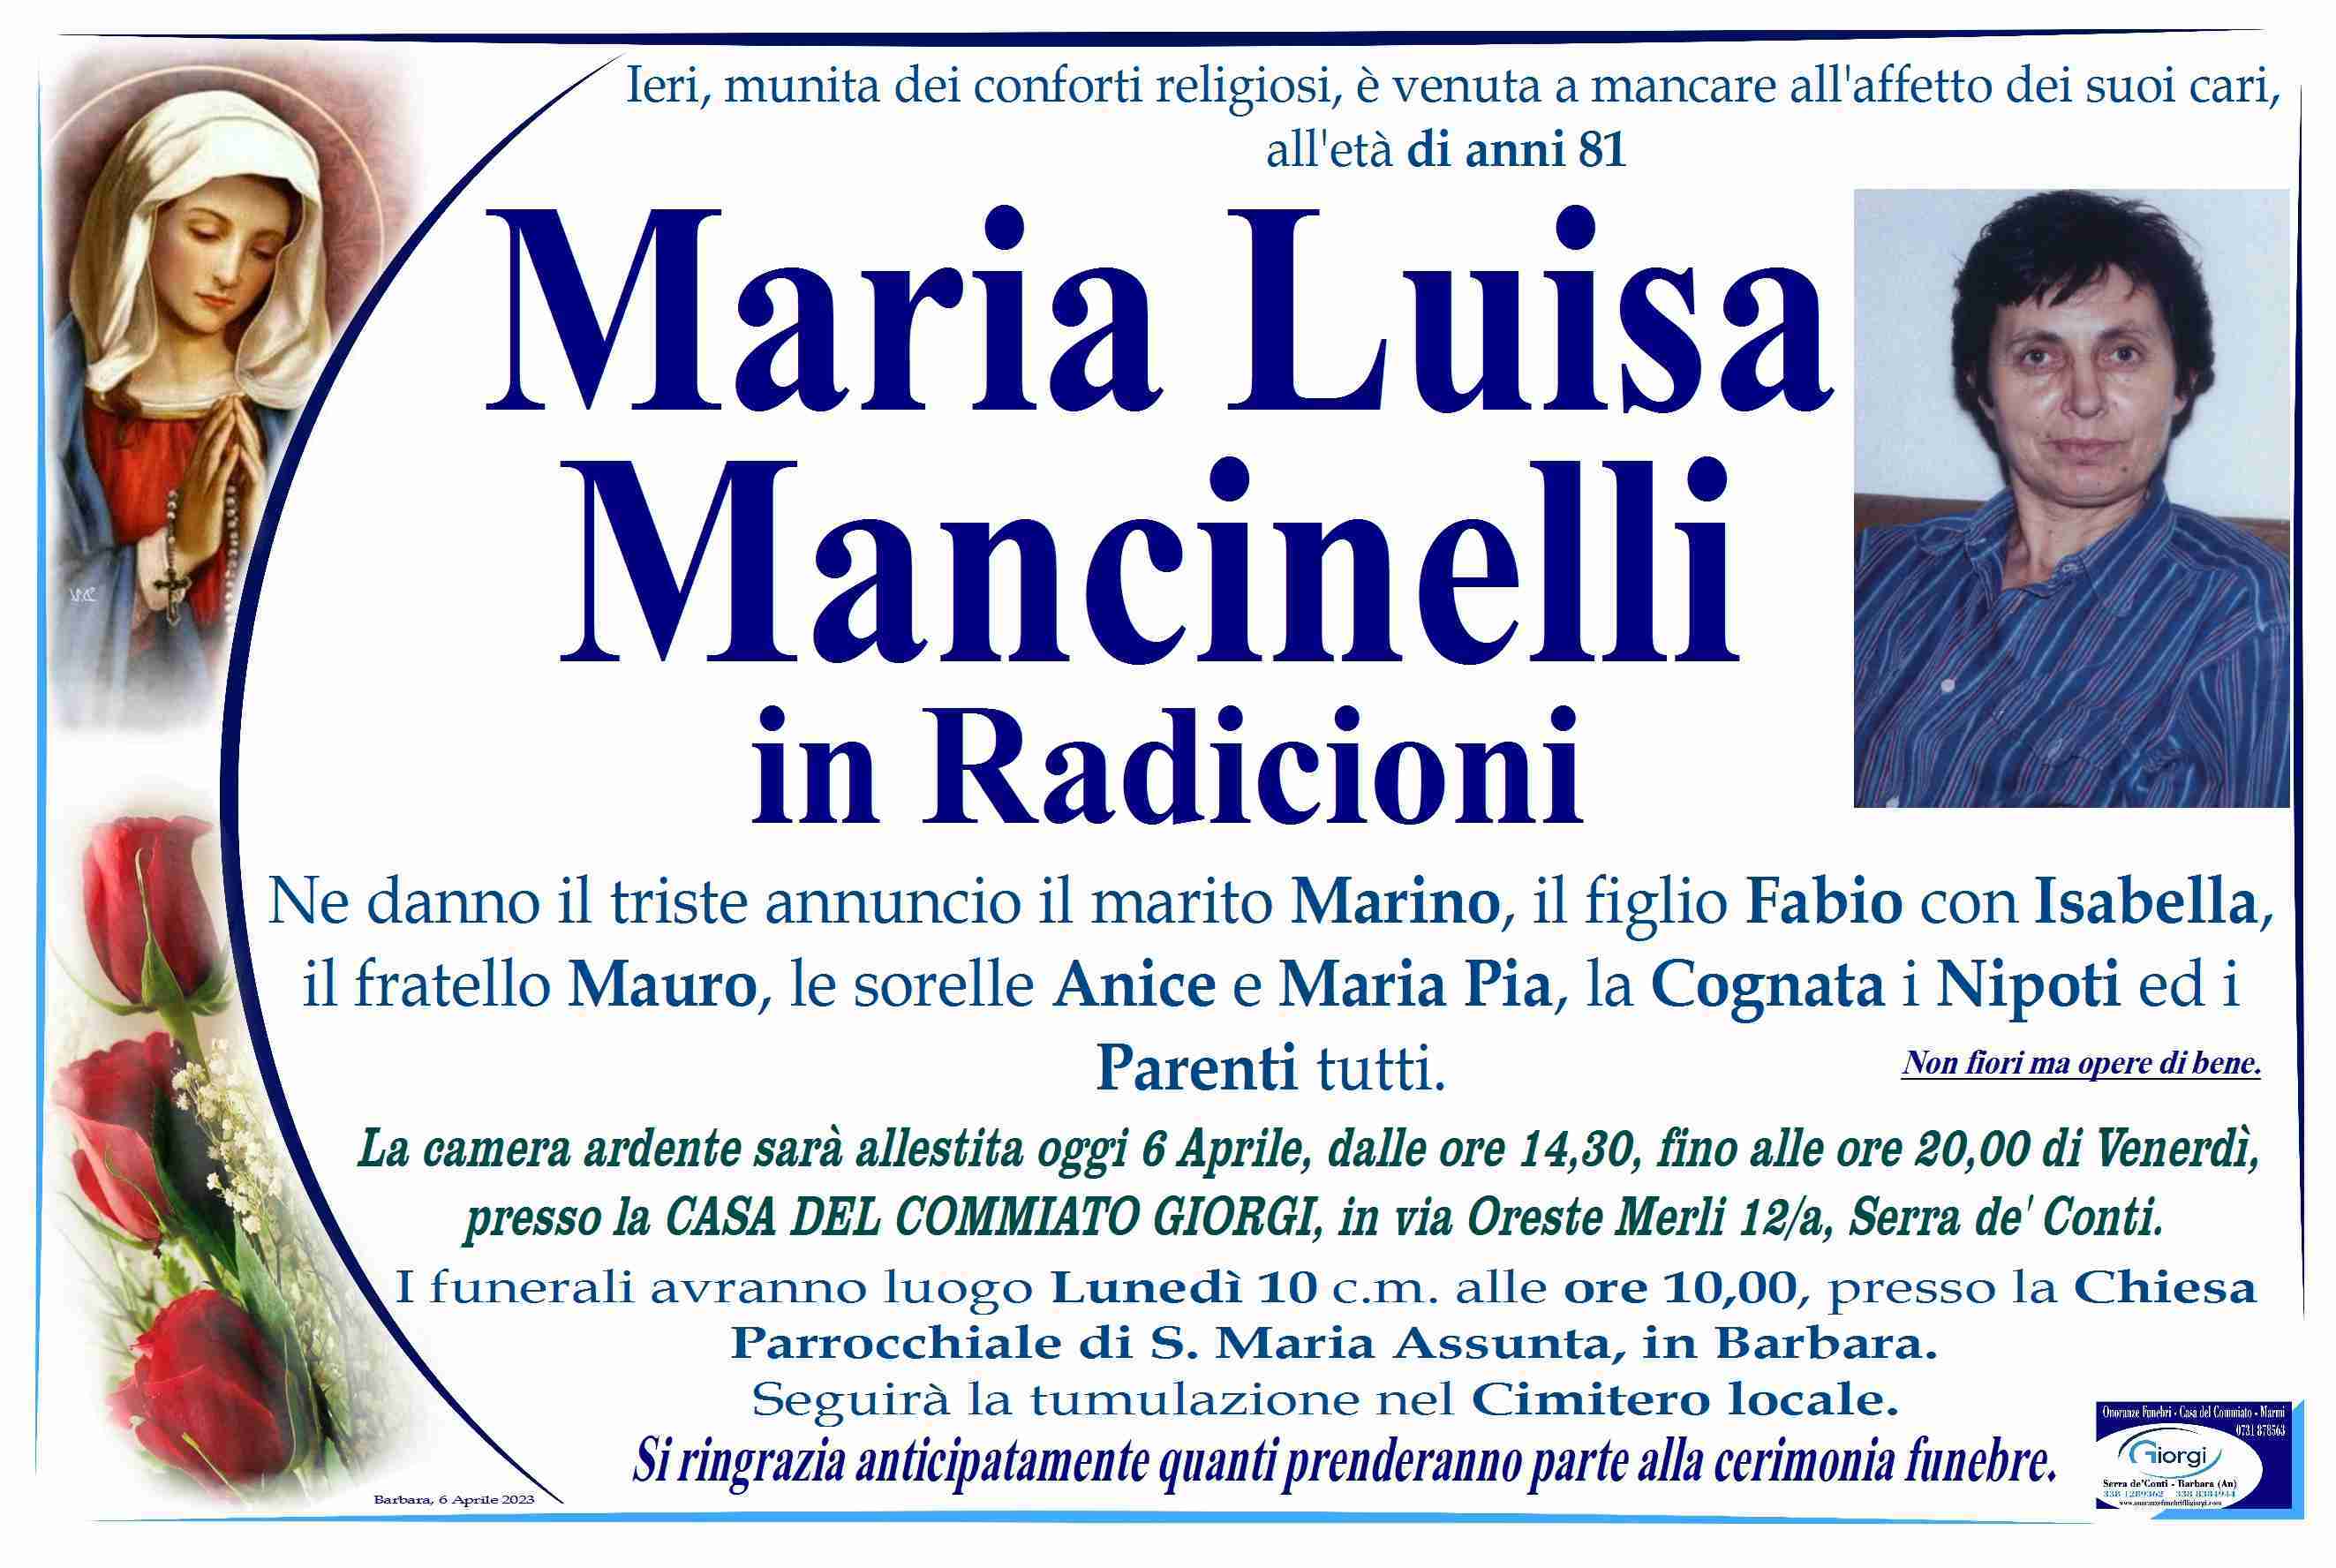 Maria Luisa Mancinelli